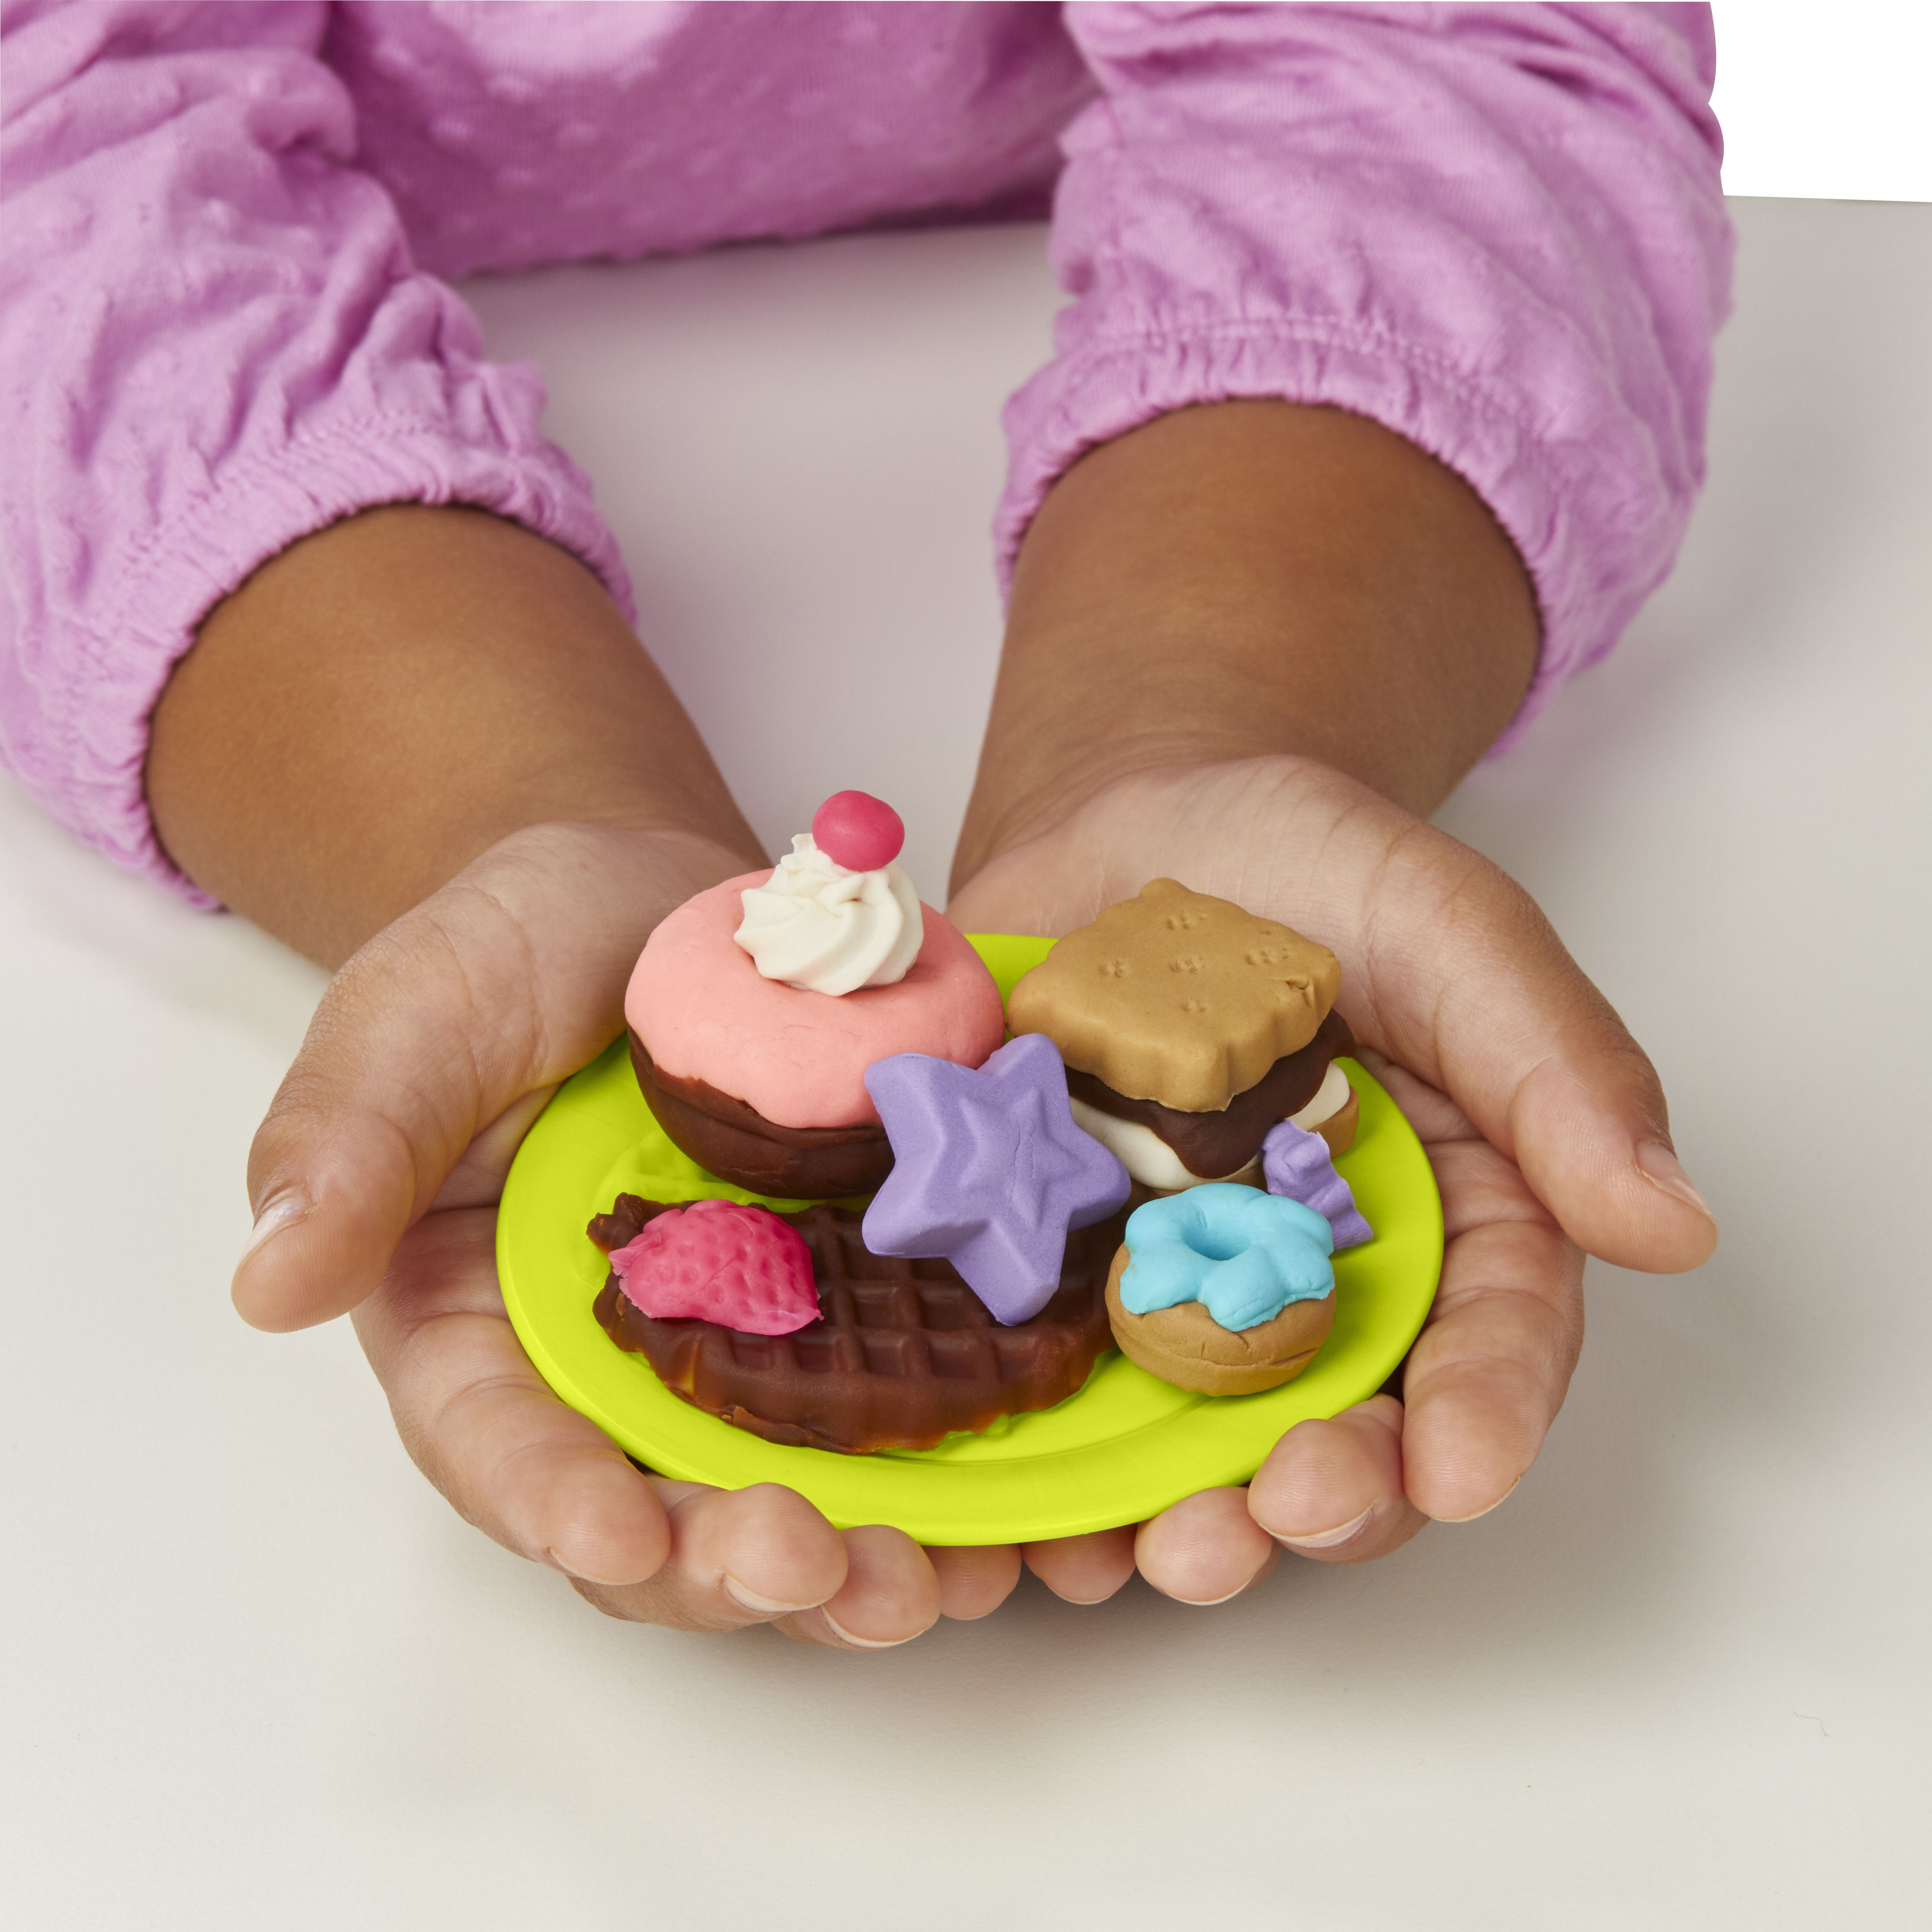 Spielset, Play-Doh Knetspaß Mehrfarbig HASBRO Café GAMING